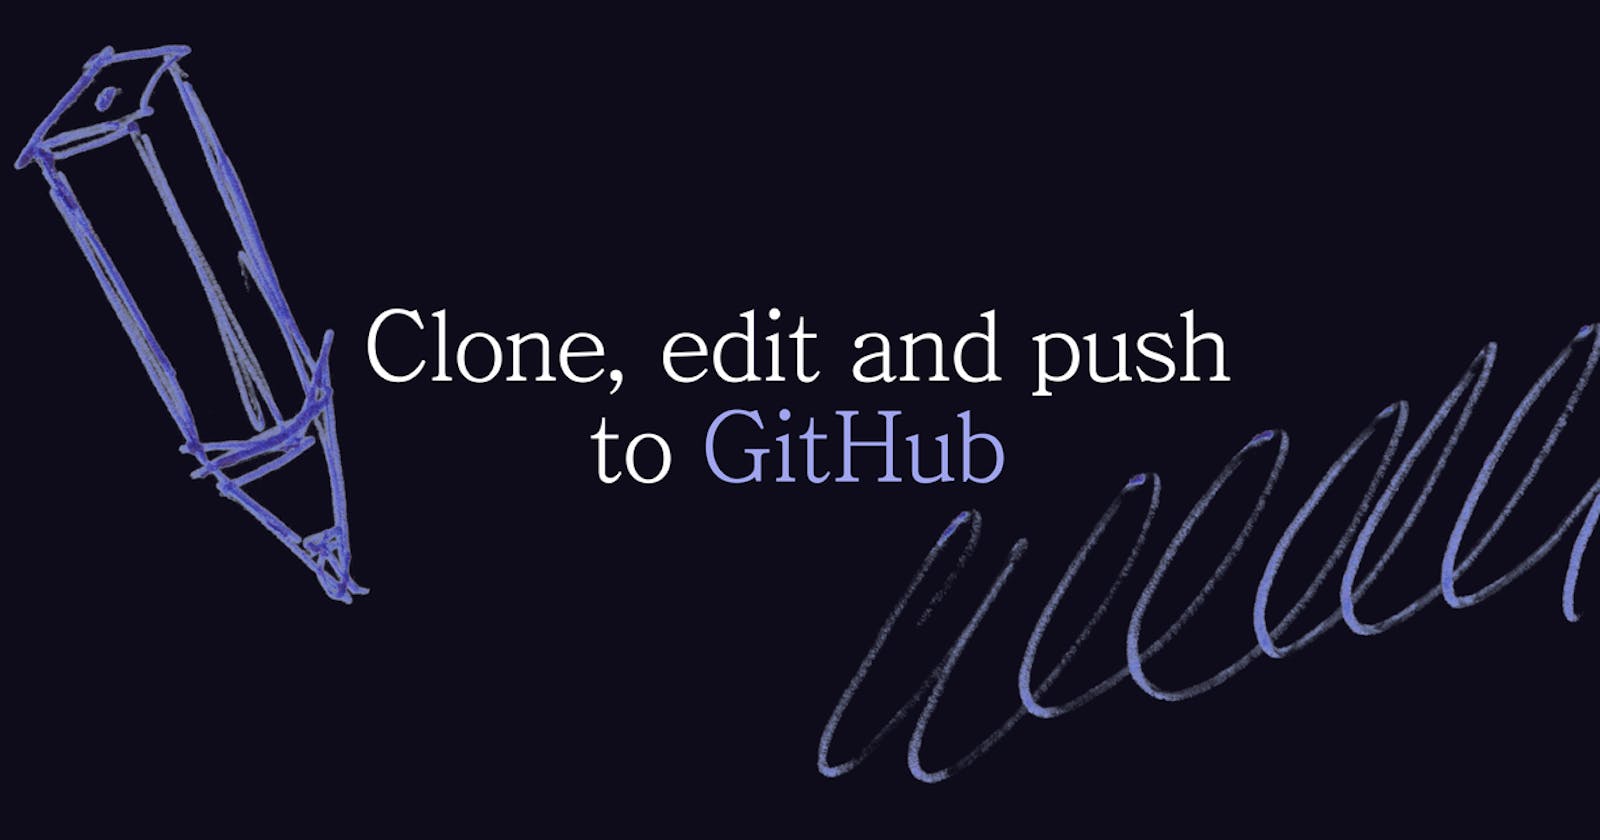 Cloning, editing and pushing to GitHub 👯‍♀️